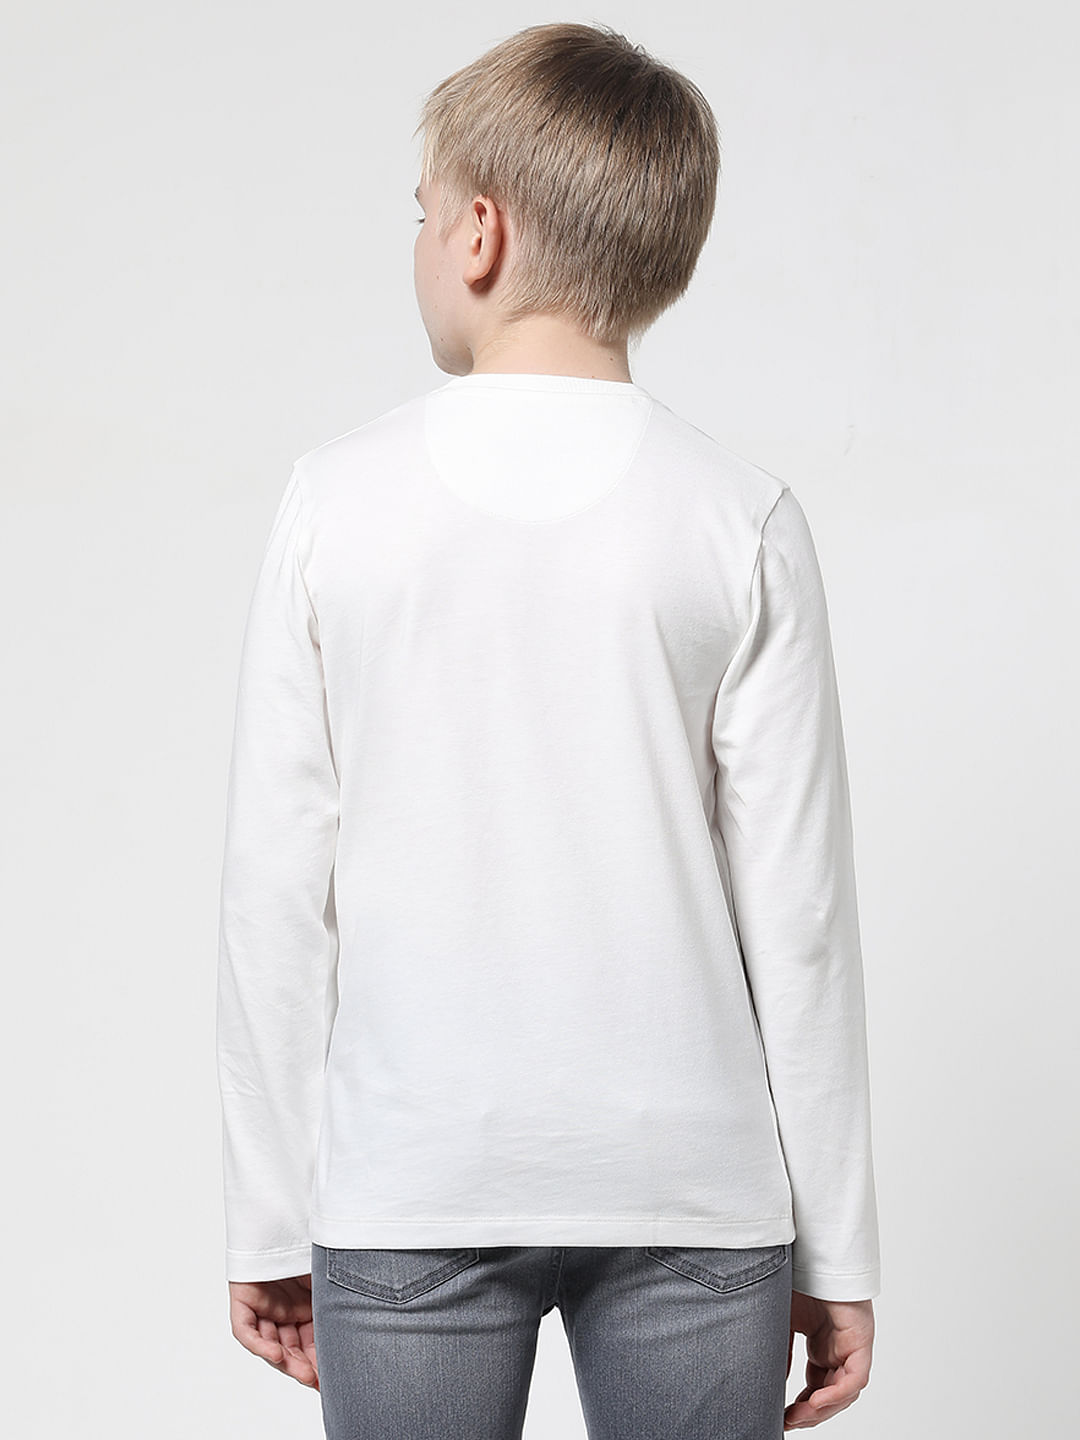 Men's Long Sleeve T-Shirts | Full Sleeve T-Shirts | Next UK